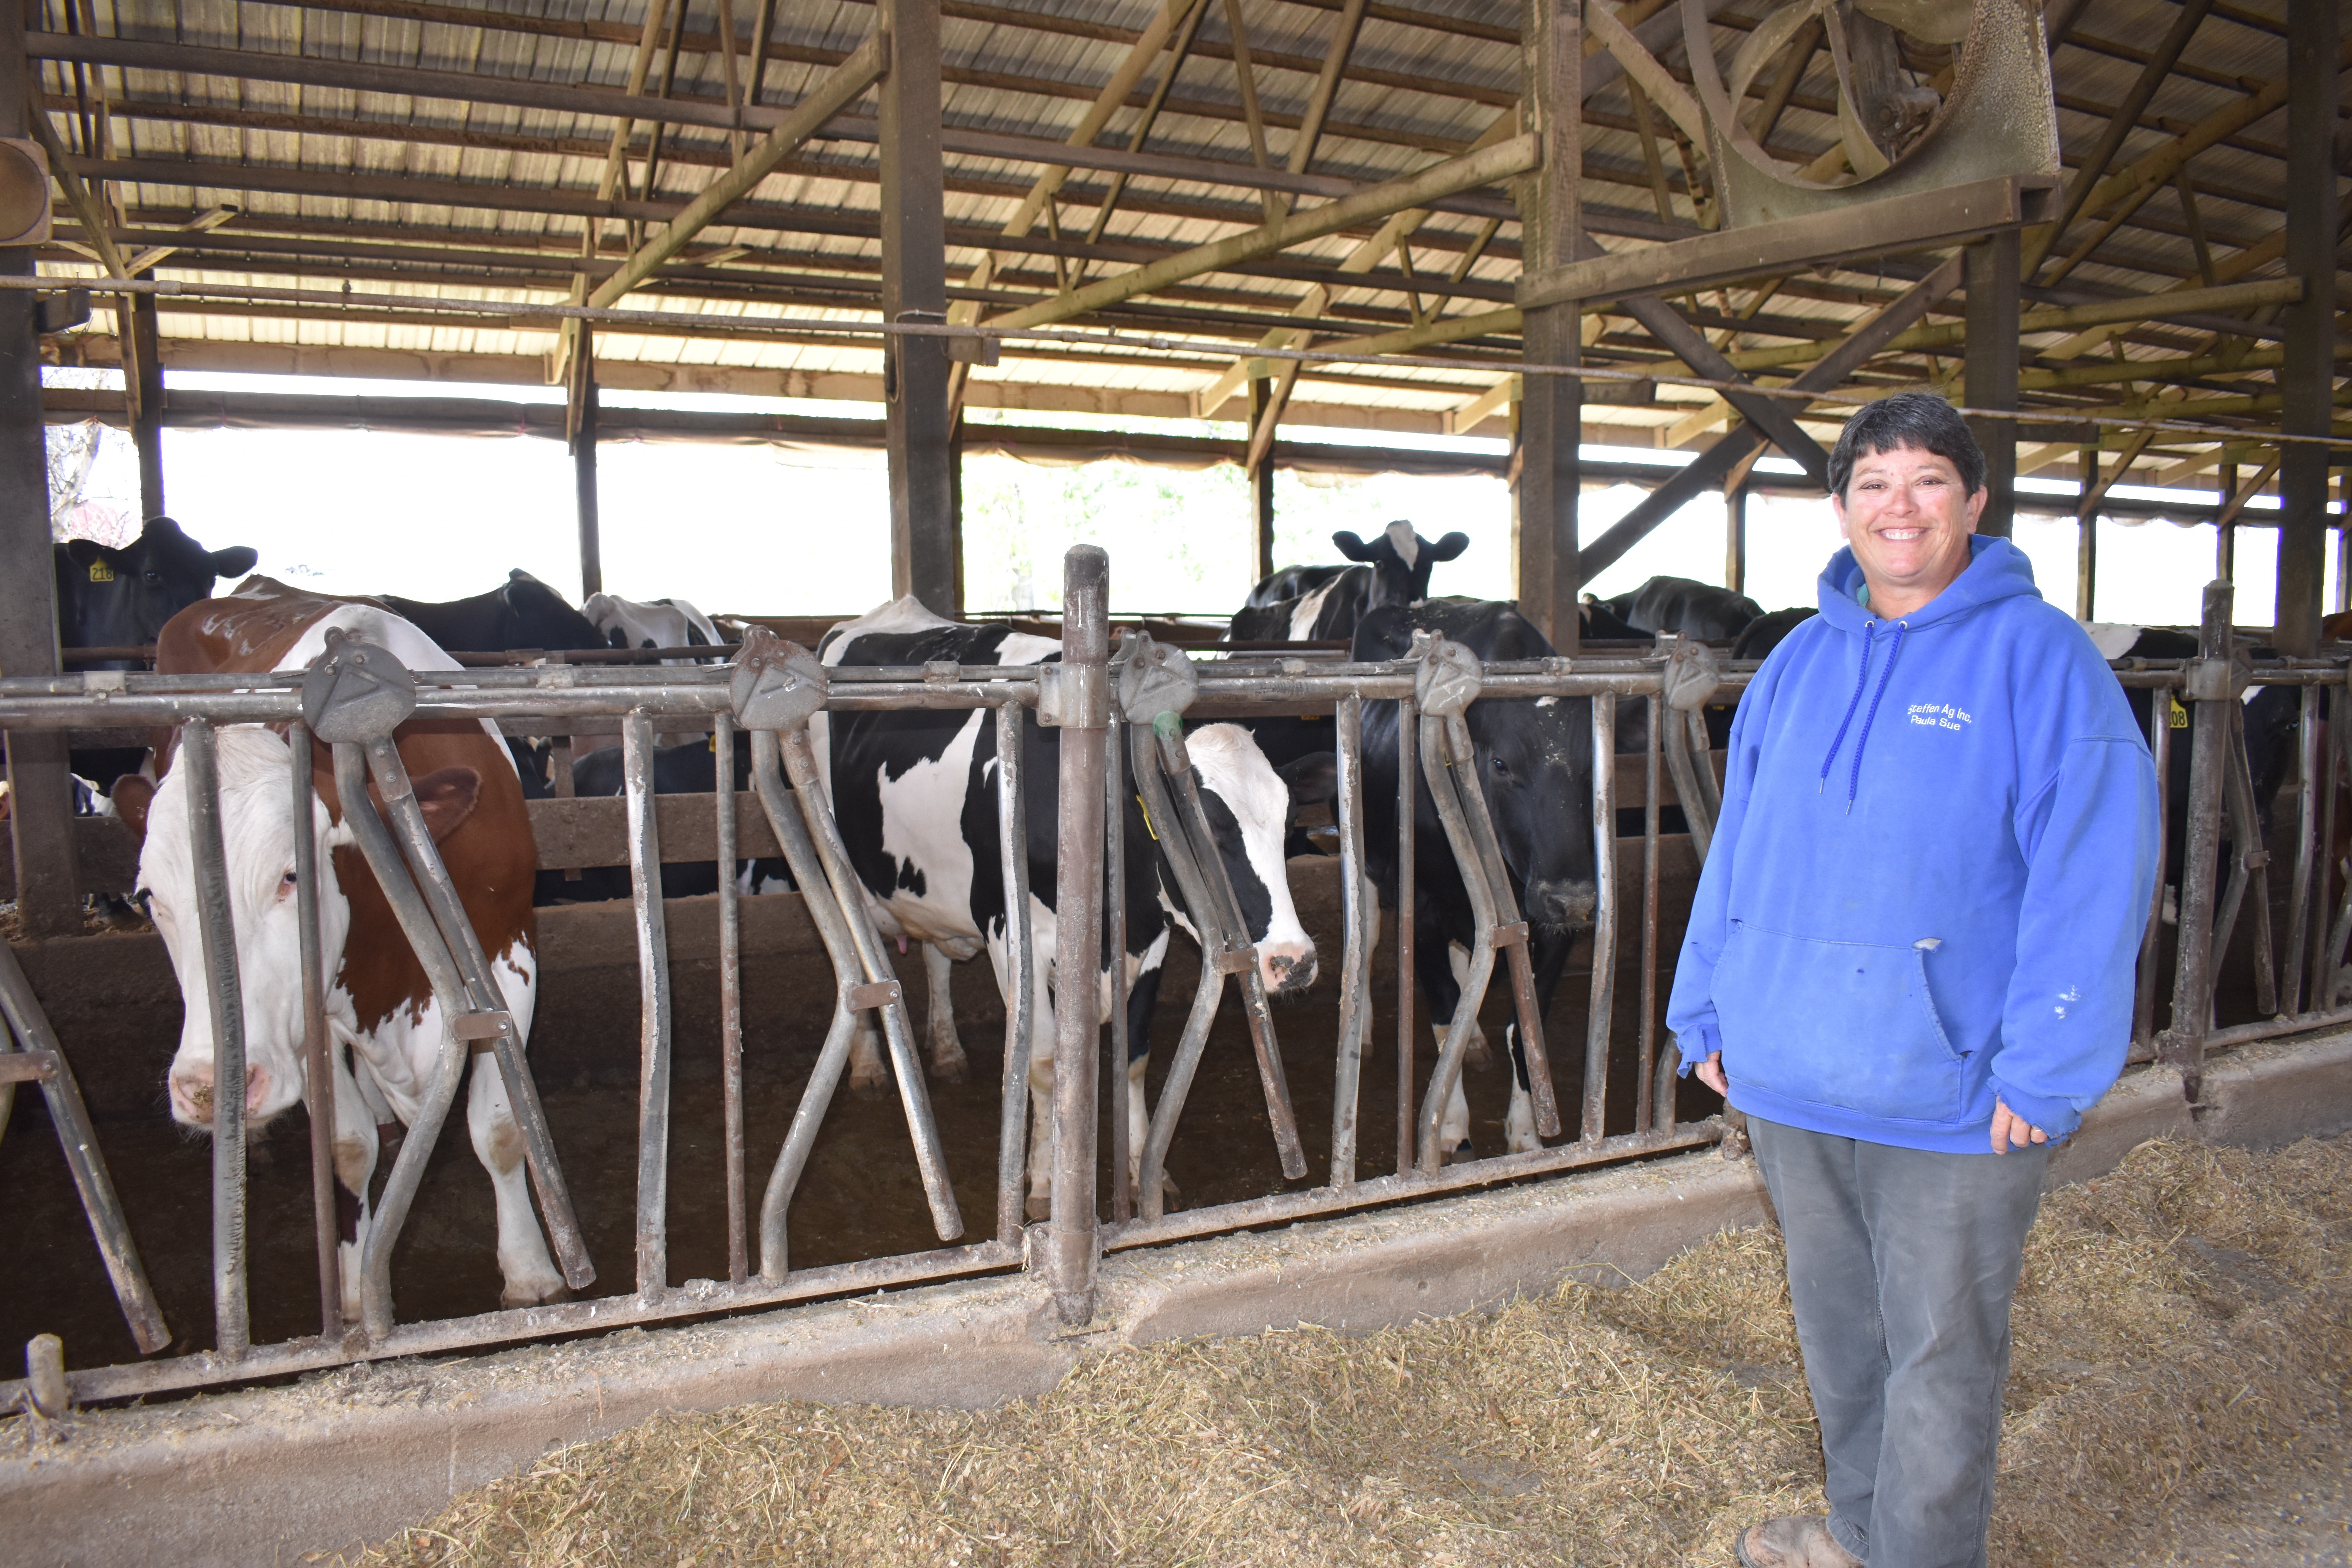 Paula Sue Steffen stands in front of cattle feeding in barn